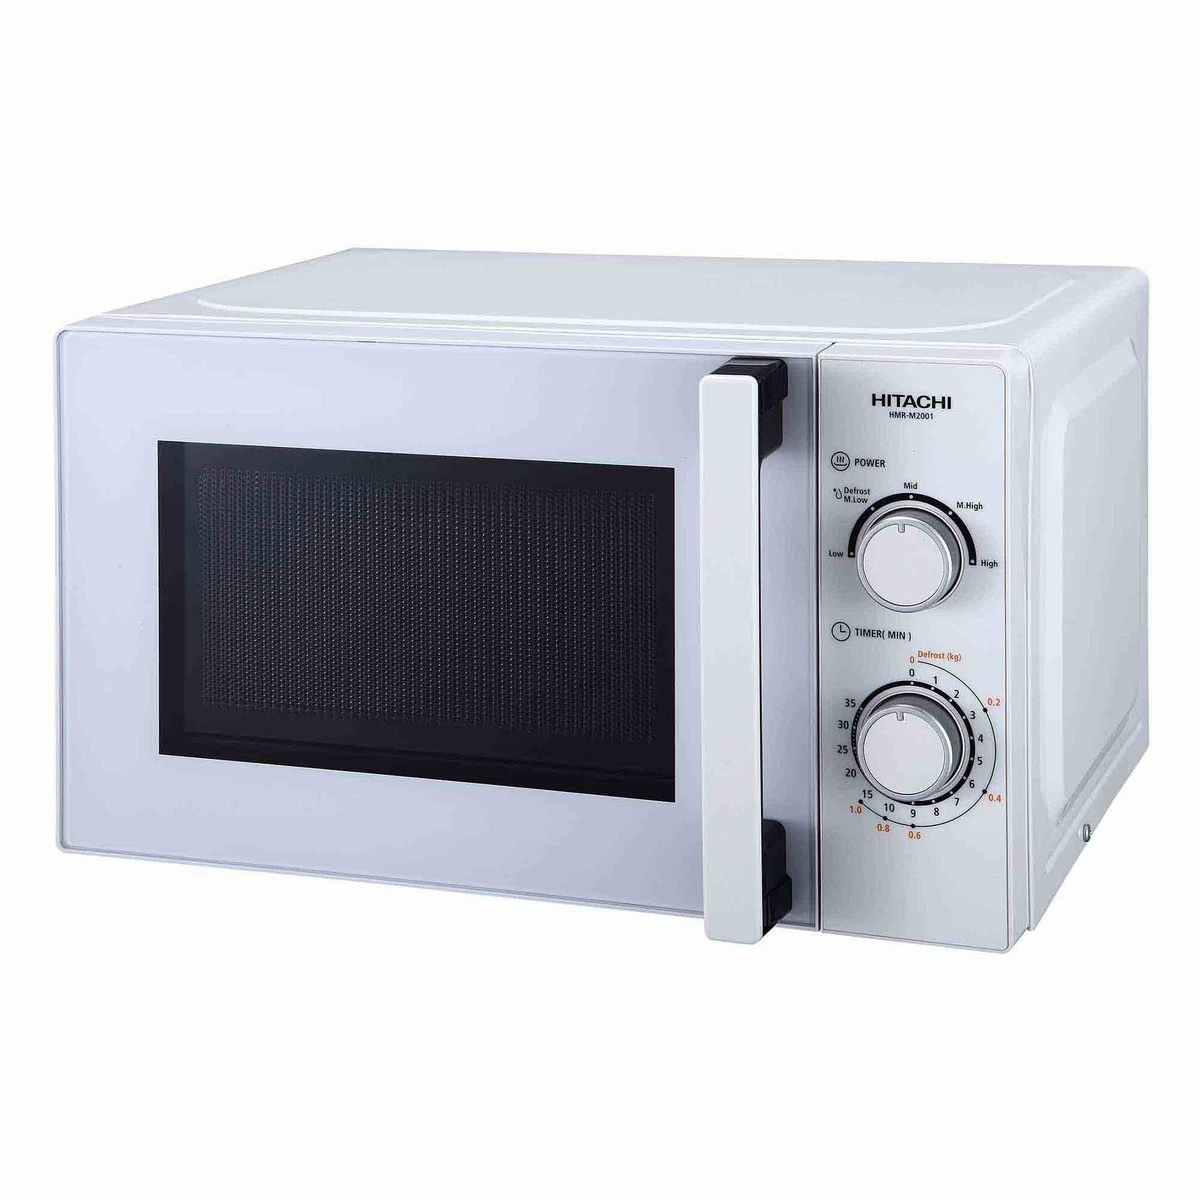 Hitachi Microwave Oven HMRM2001 20Ltr